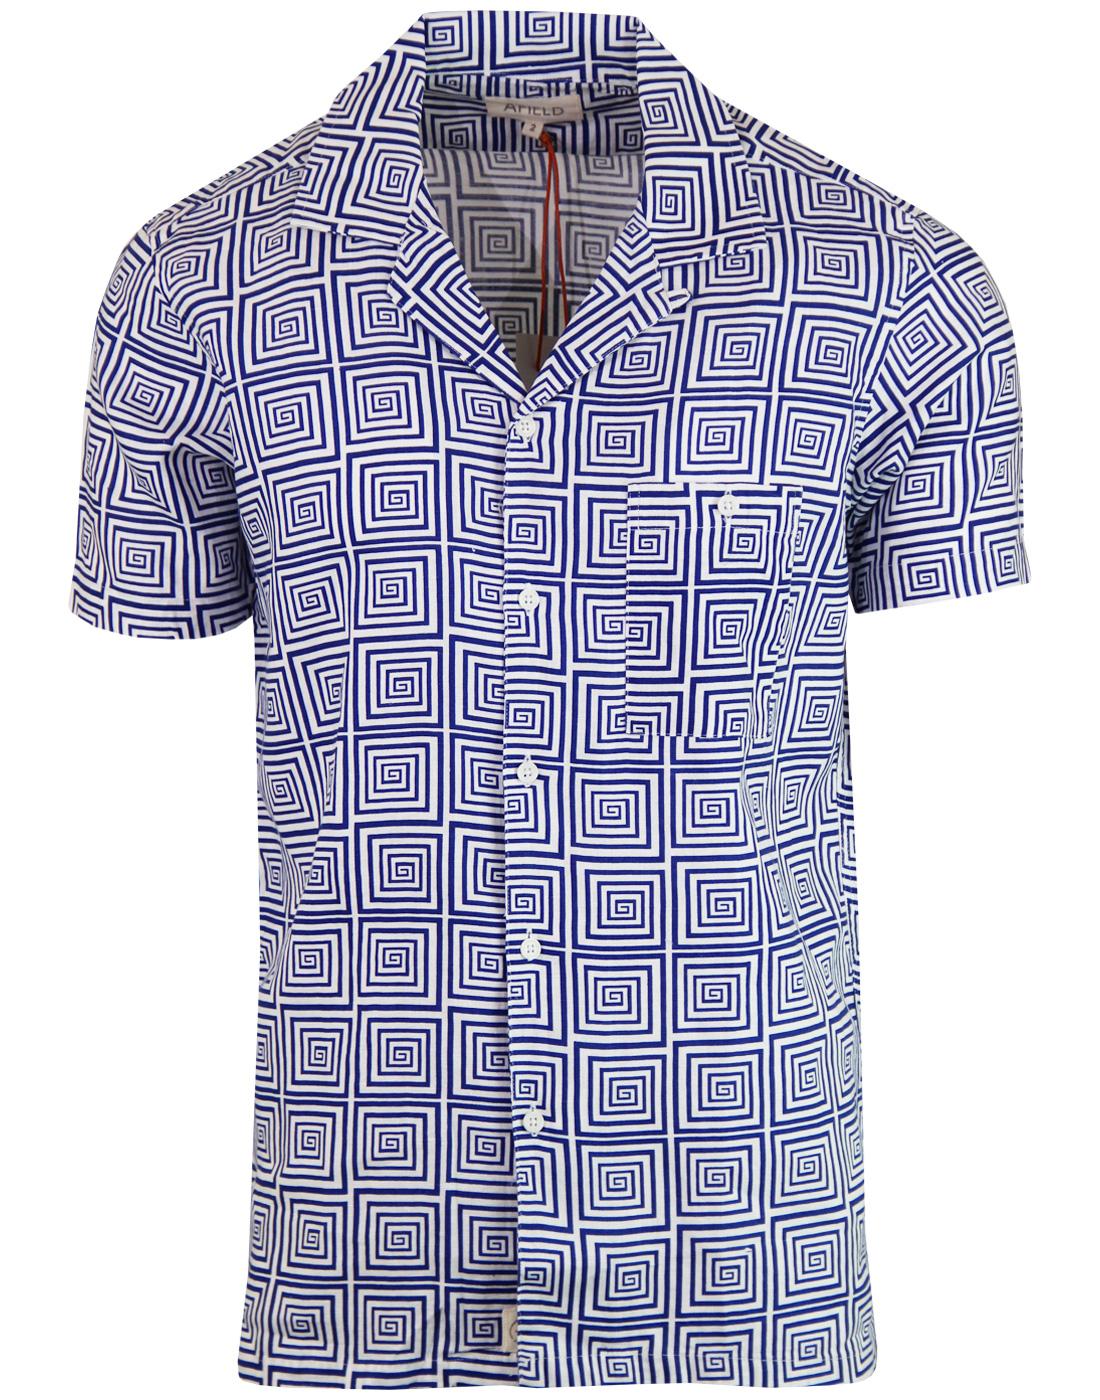 Selleck AFIELD Retro Spiral Square Hawaiian Shirt